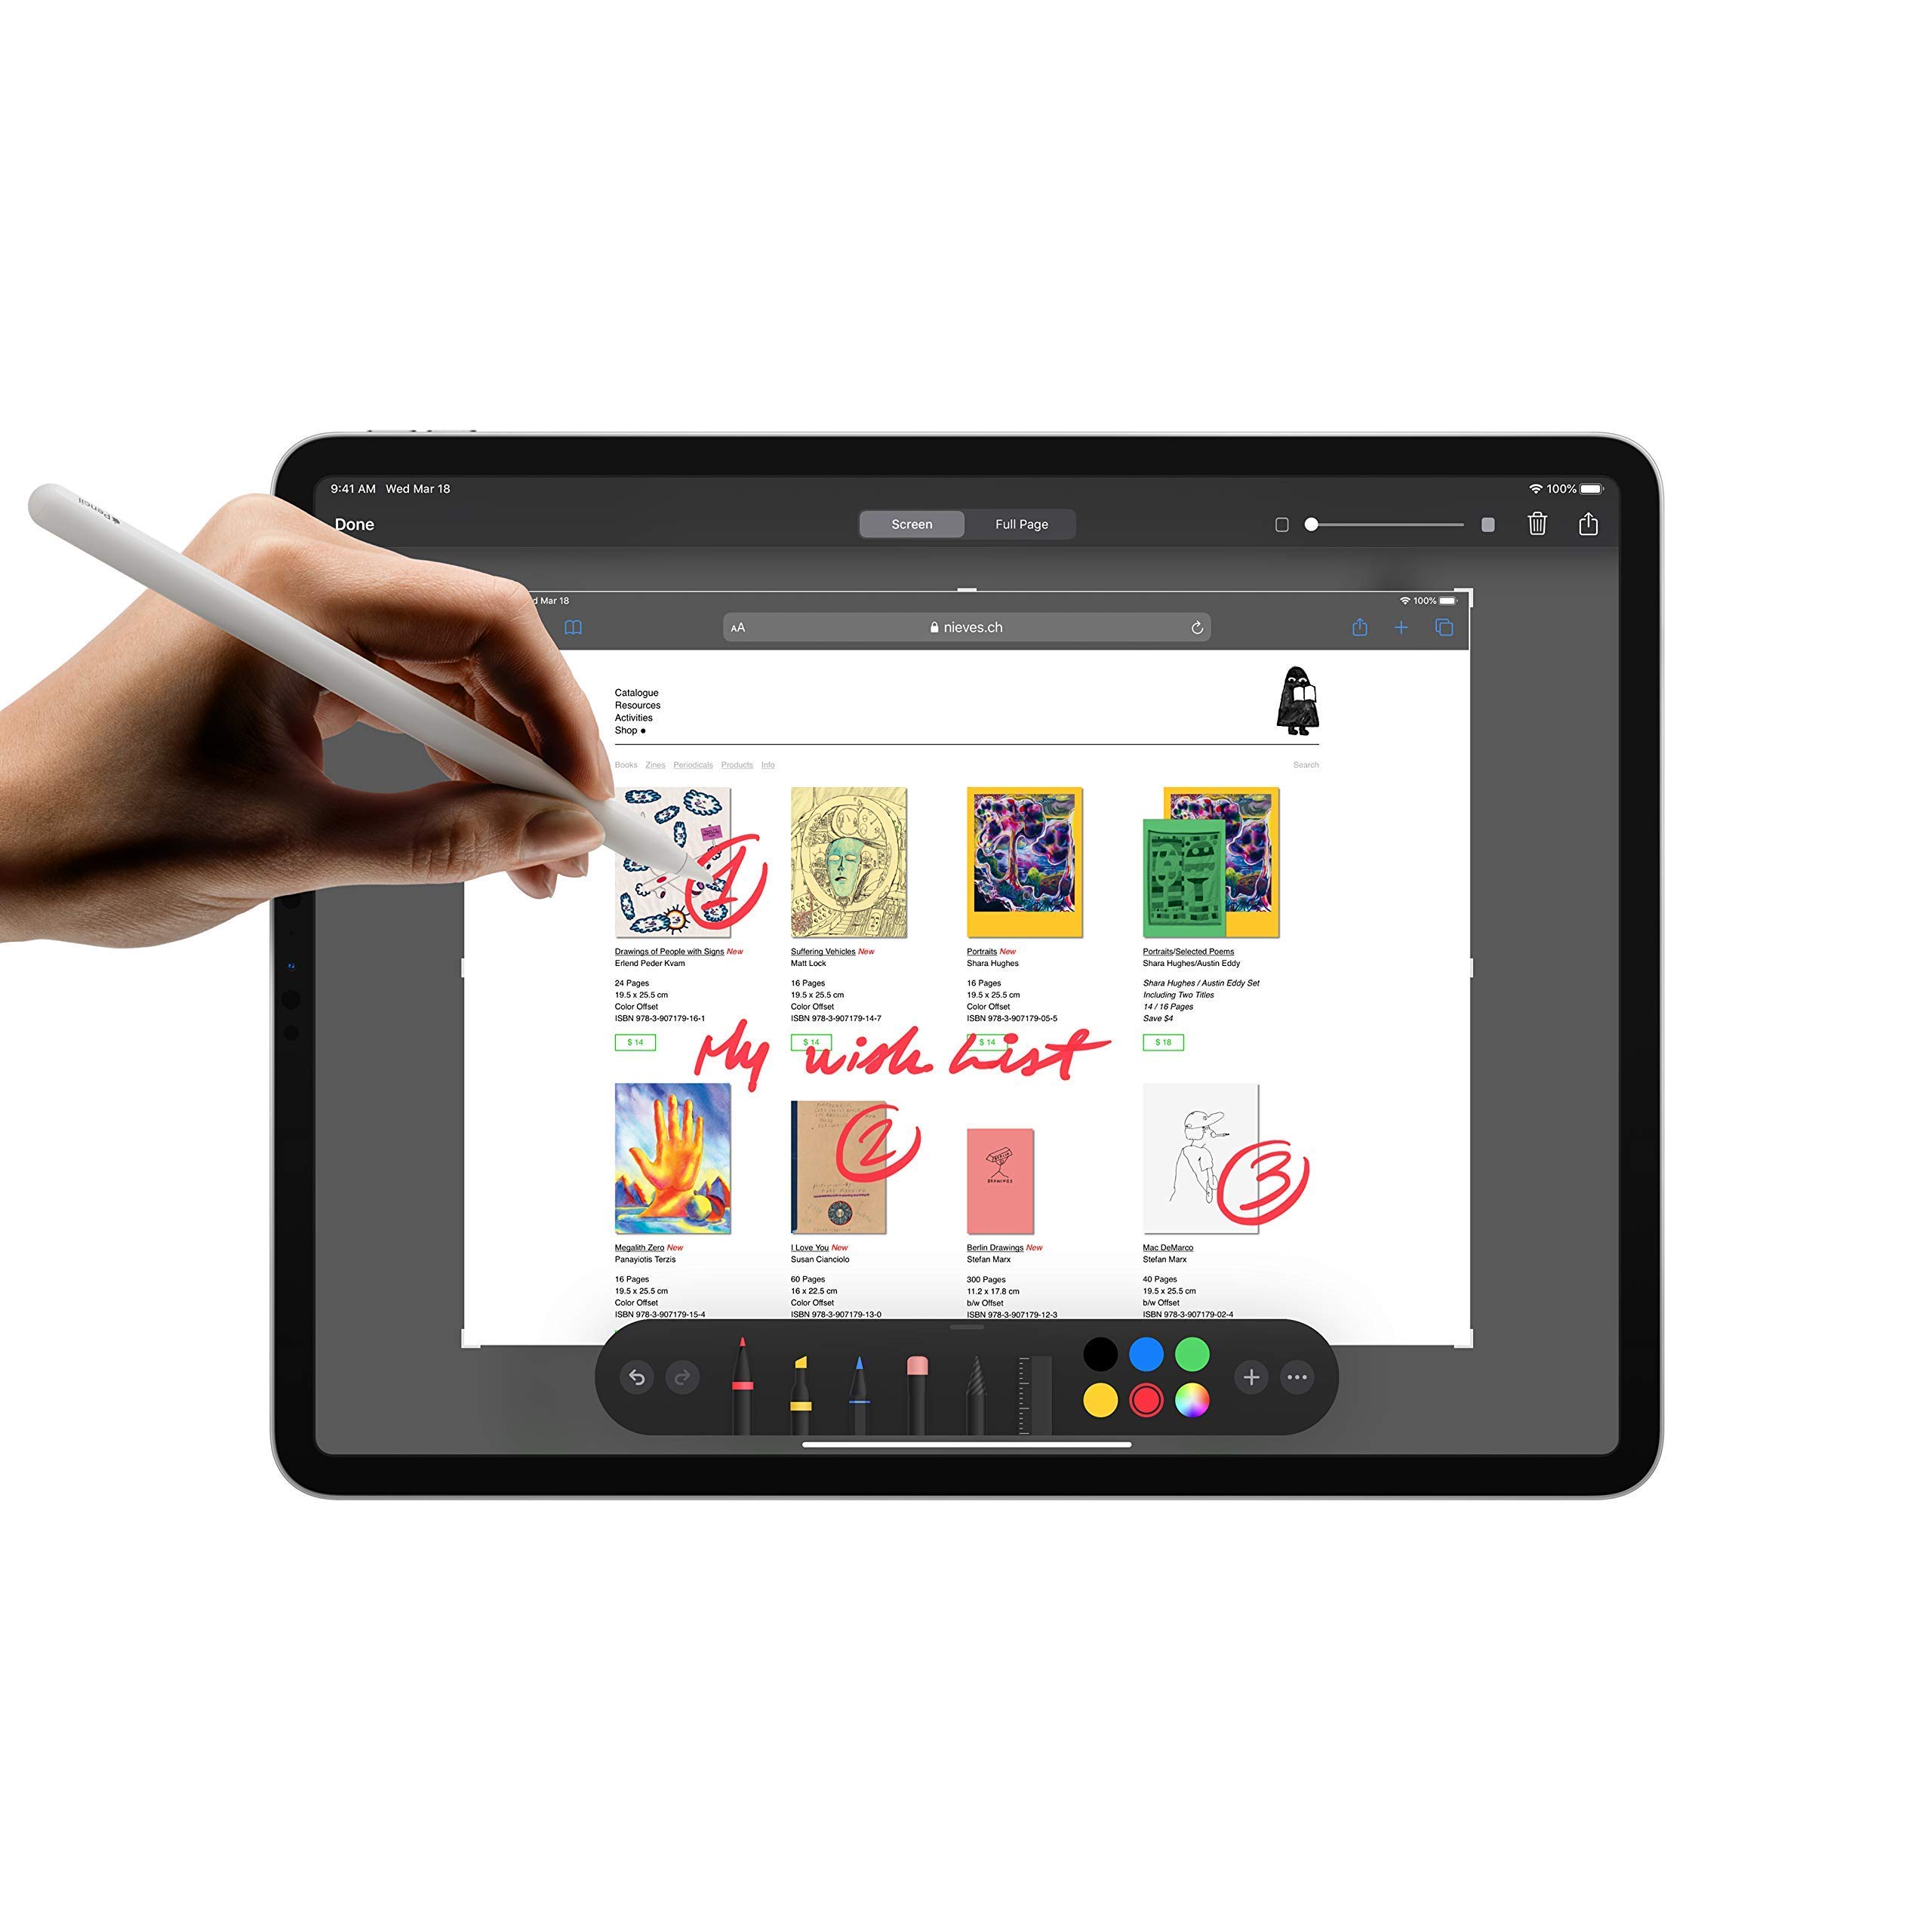 2020 Apple iPad Pro 2nd Gen (11 inch, Wi-Fi, 512GB) Silver (Renewed)